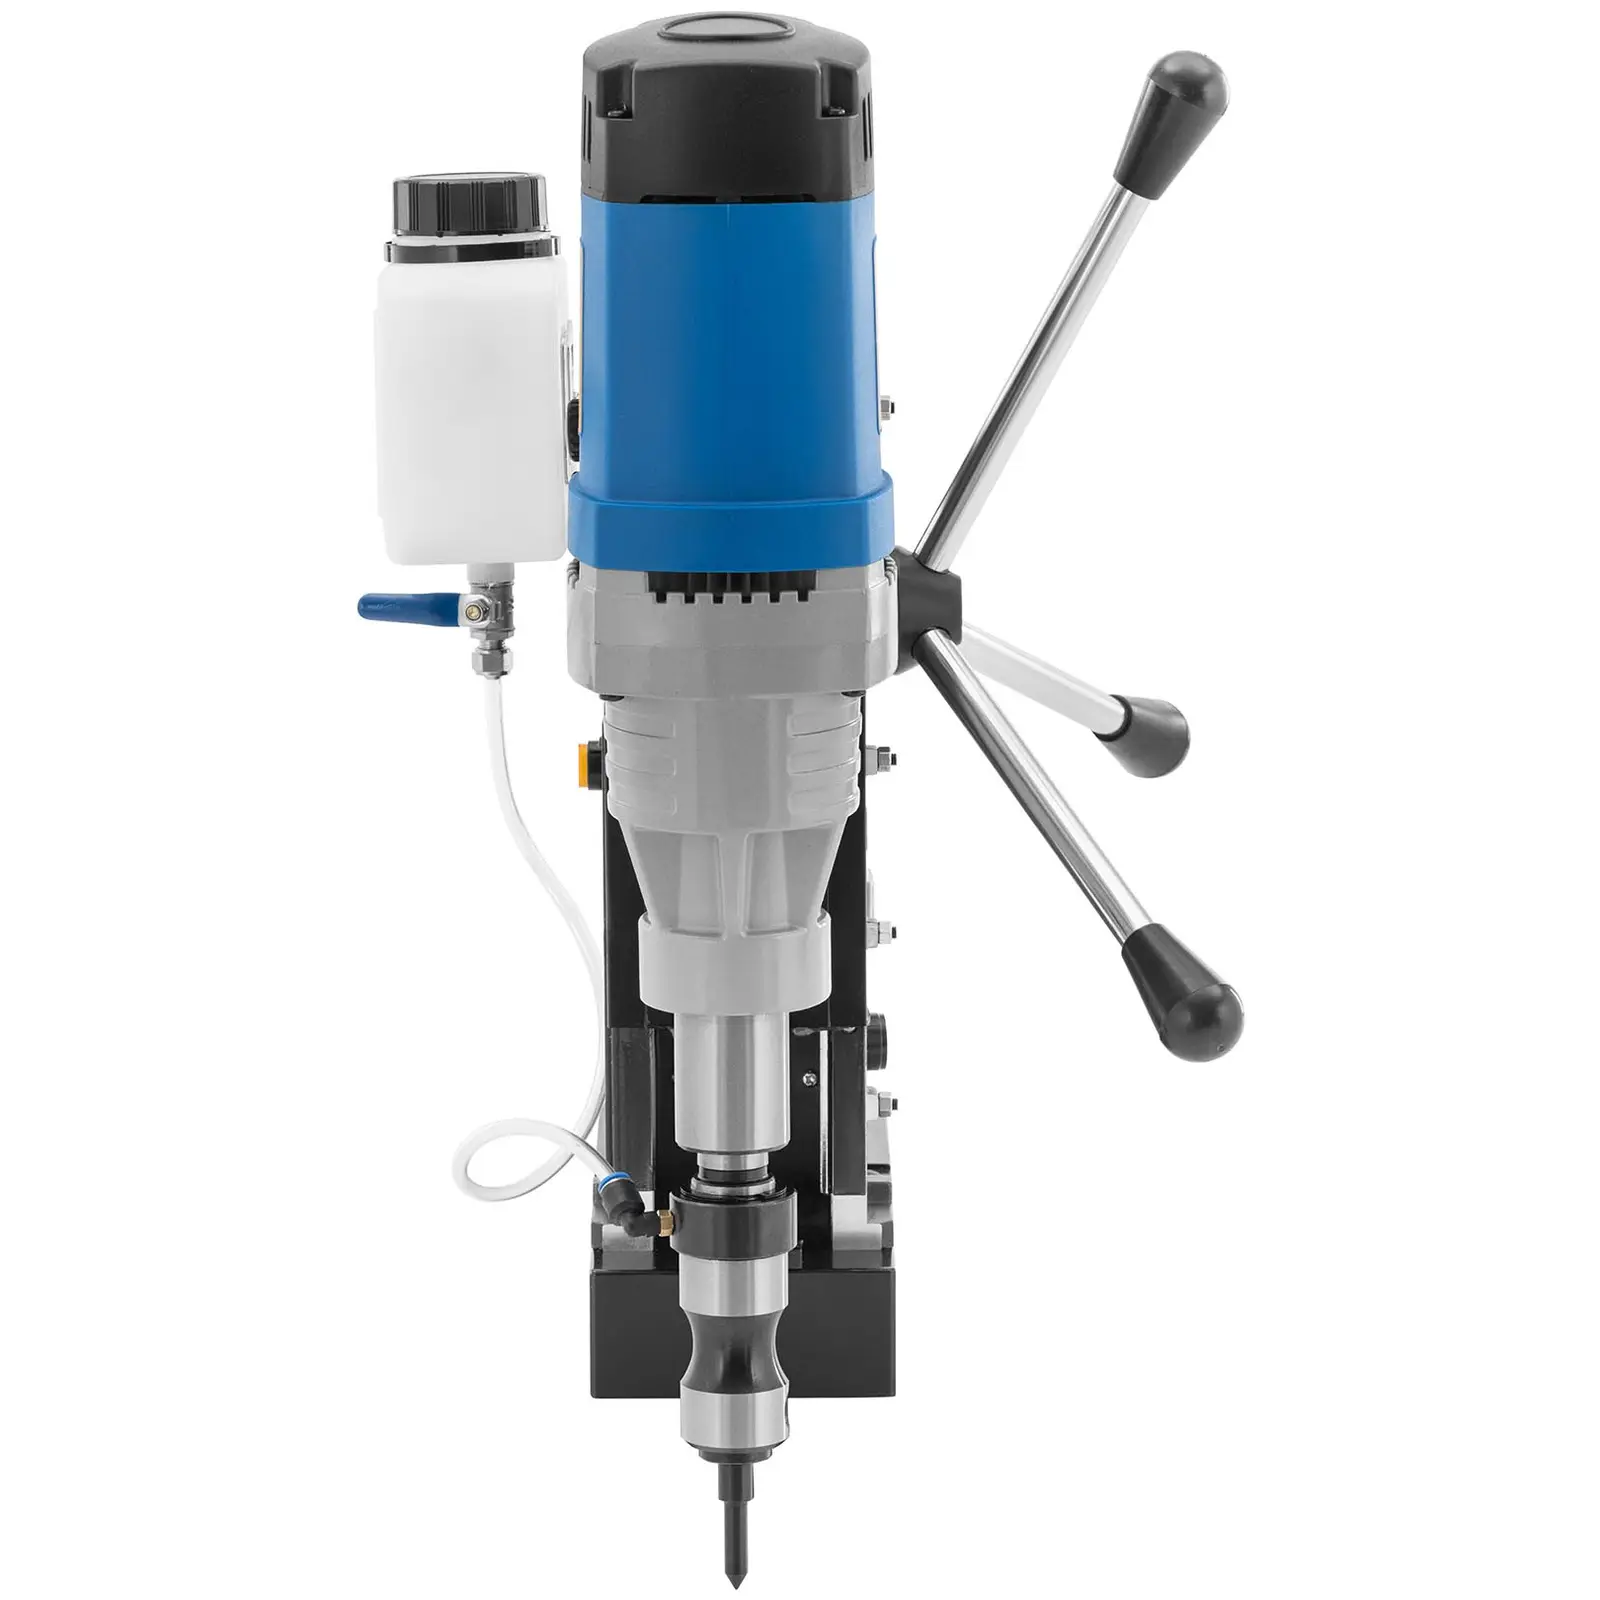 Magnetic drill - 1680 W - 395 rpm - Weldon shank 19 mm - Laser